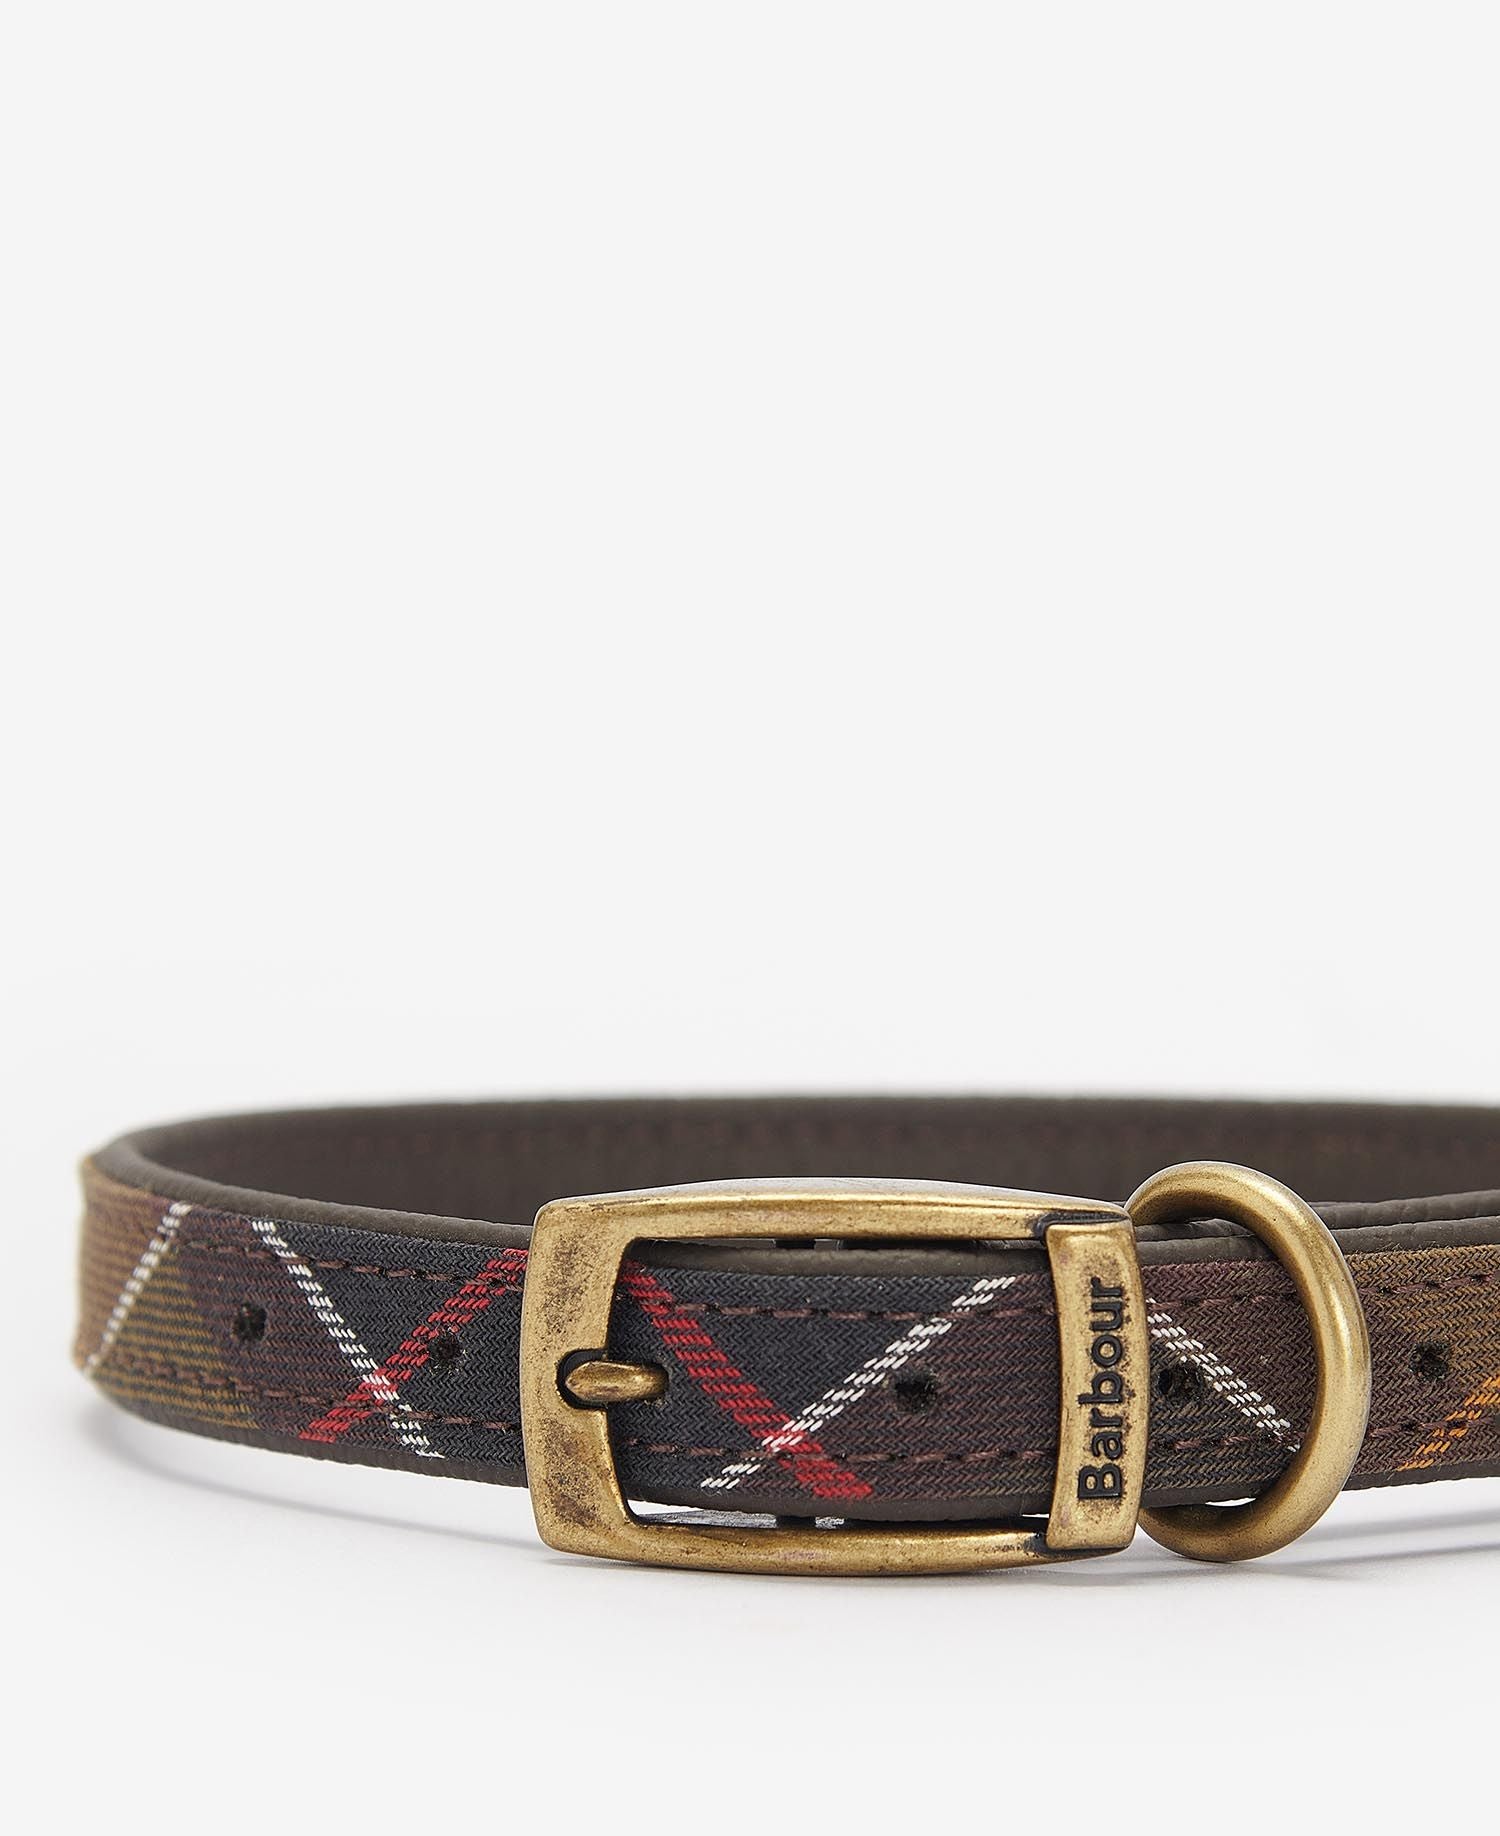 Tartan Leather Dog Collar - Classic Tartan